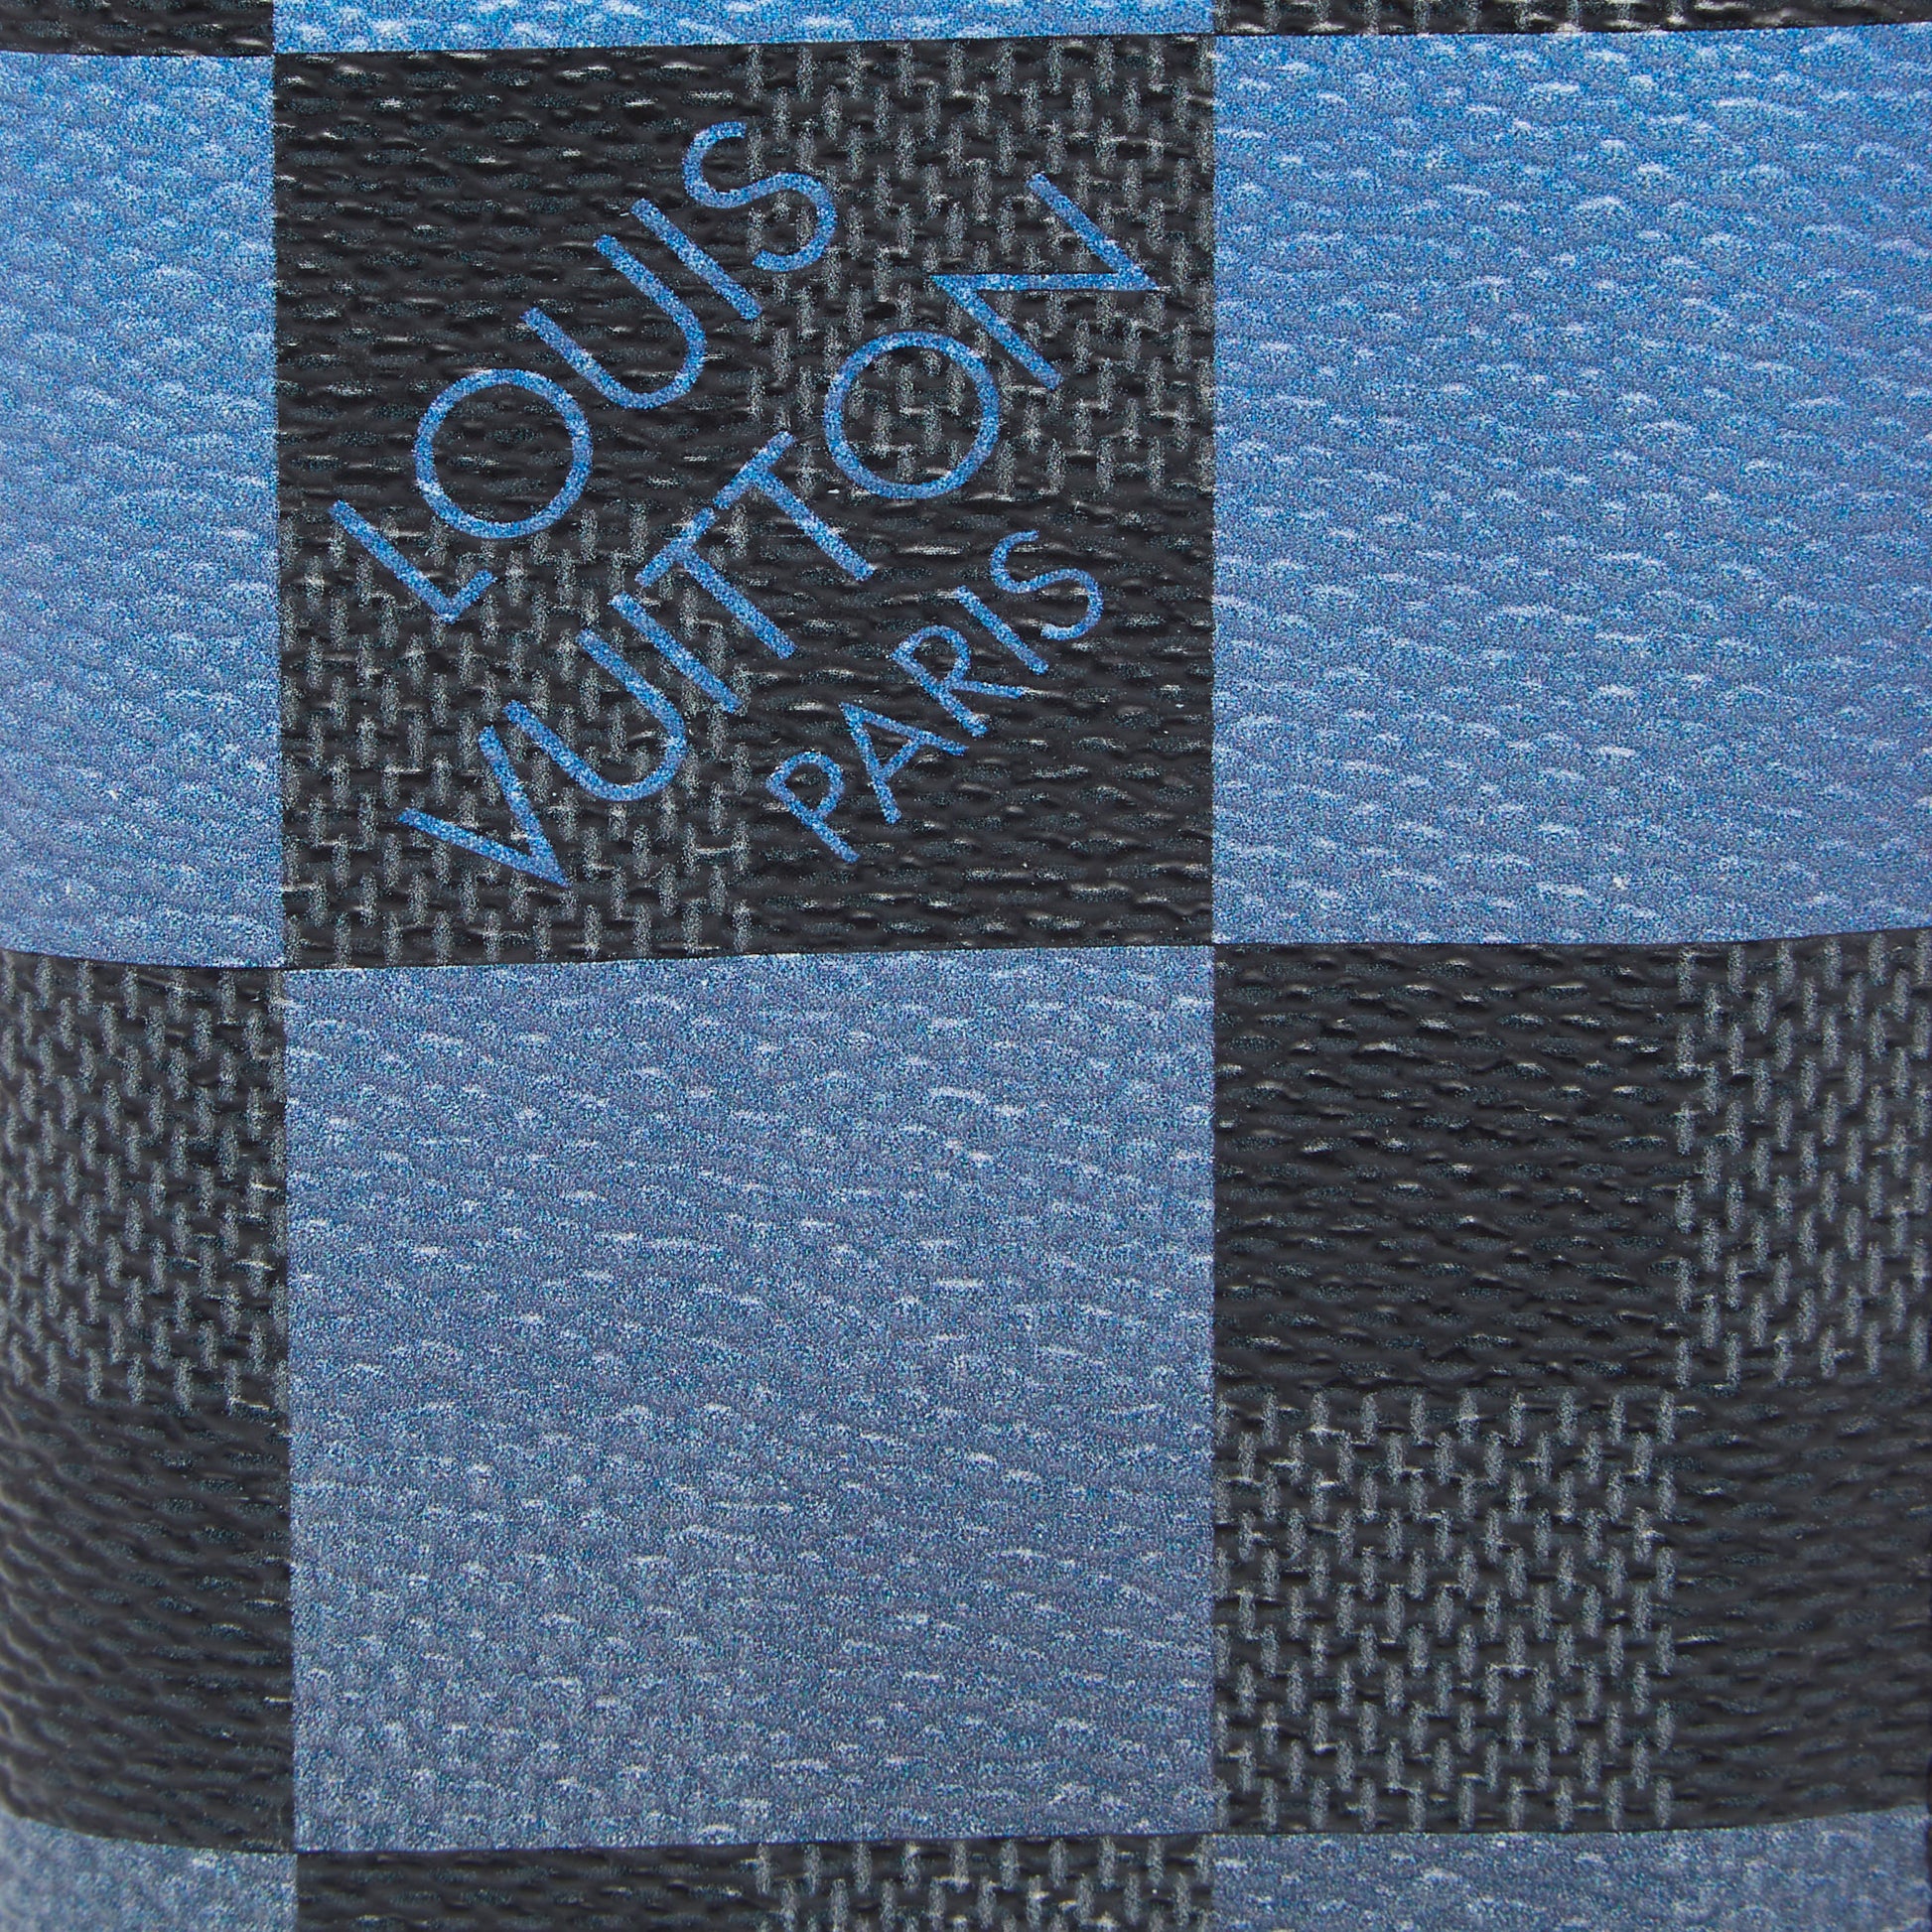 Louis Vuitton Damier Graphite Giant Blue Pocket Organizer Black